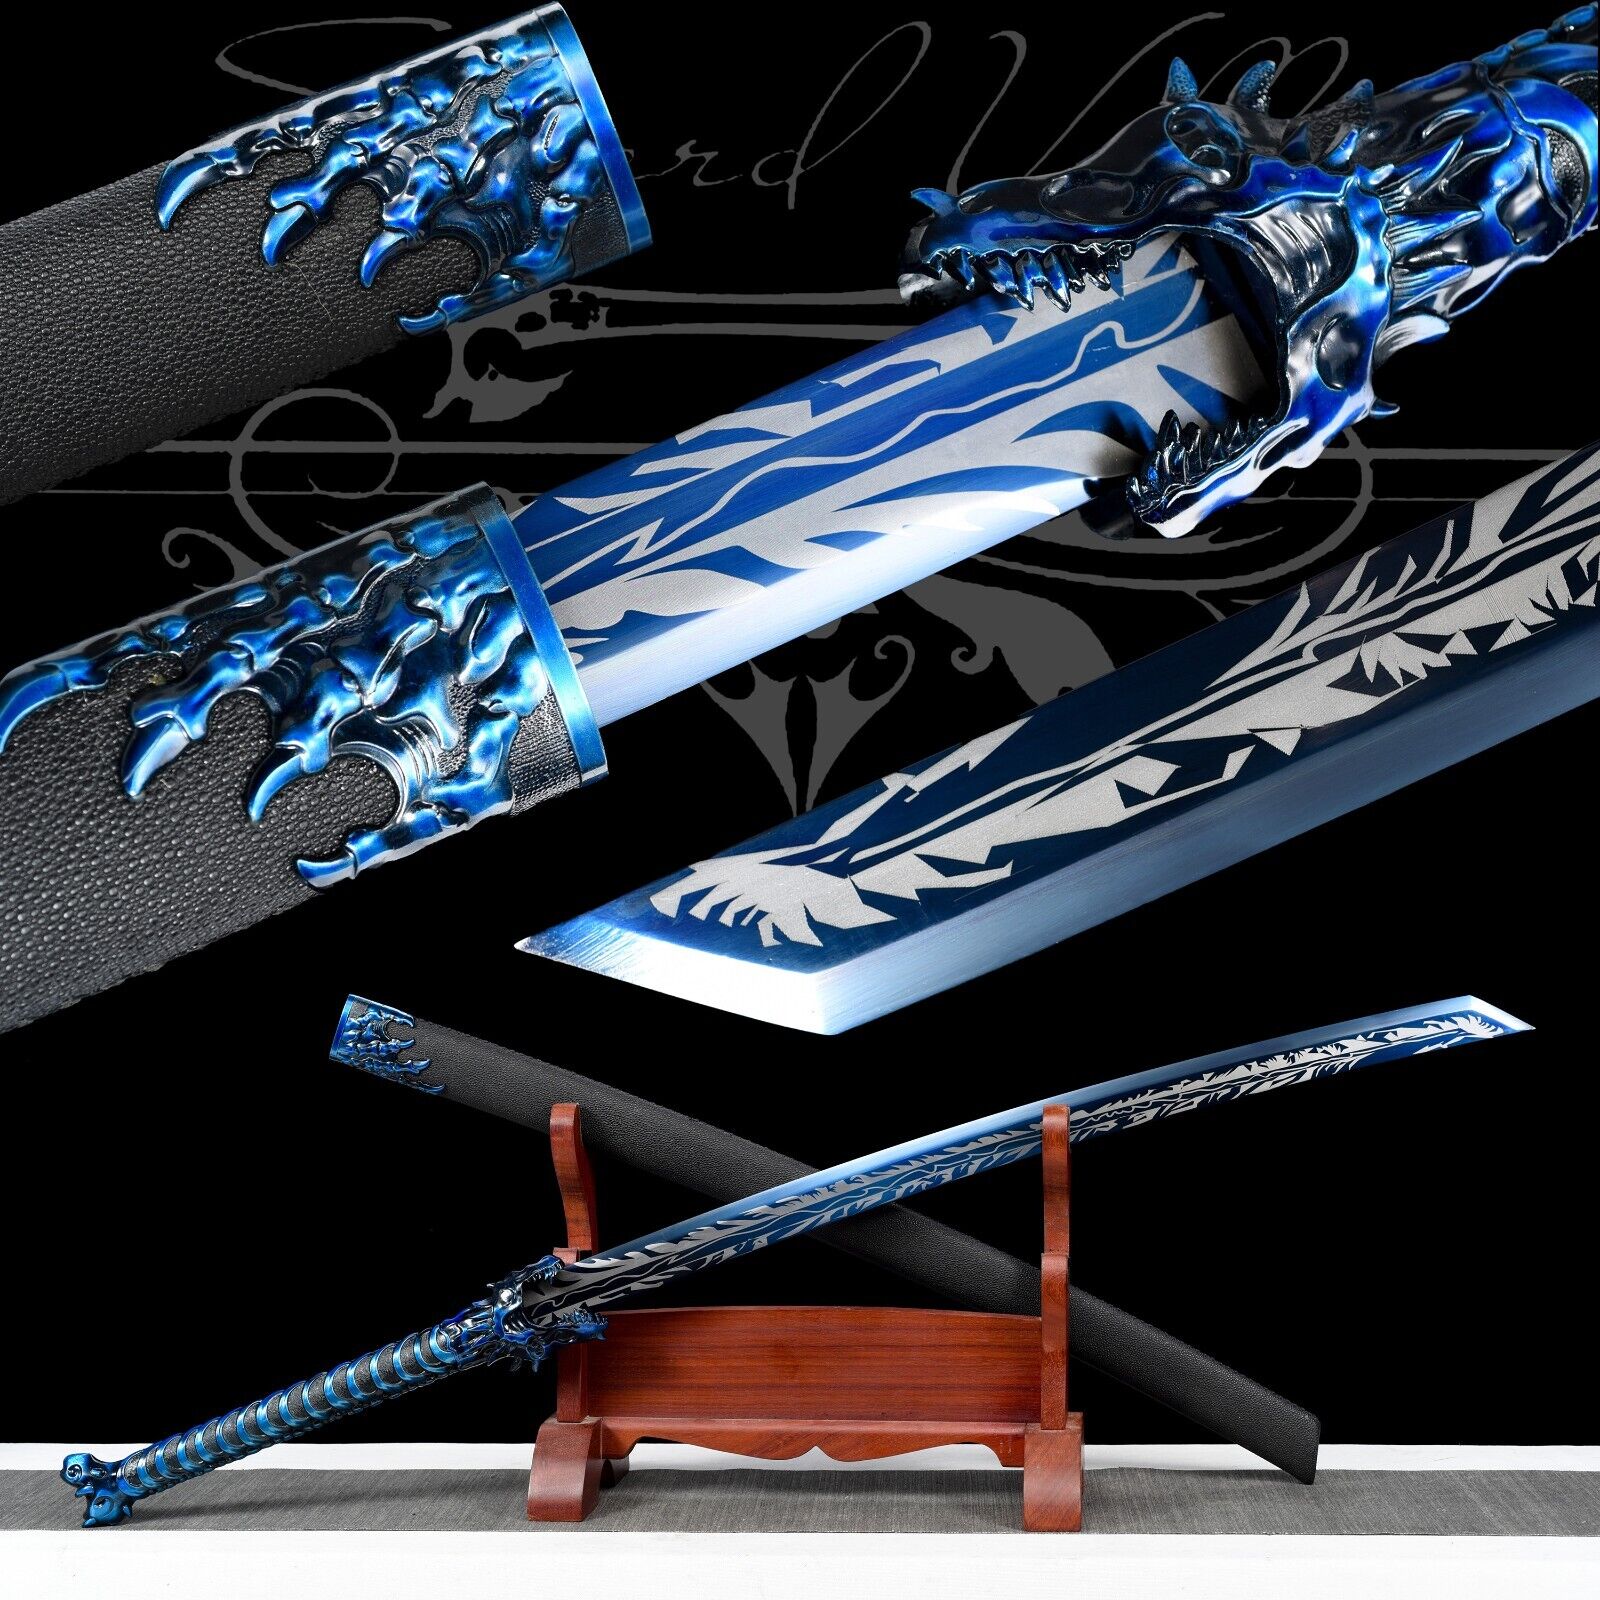 110cm Handmade Katana/High-Quality Blade/Weapon/Sharp/Manganese Steel/Blue